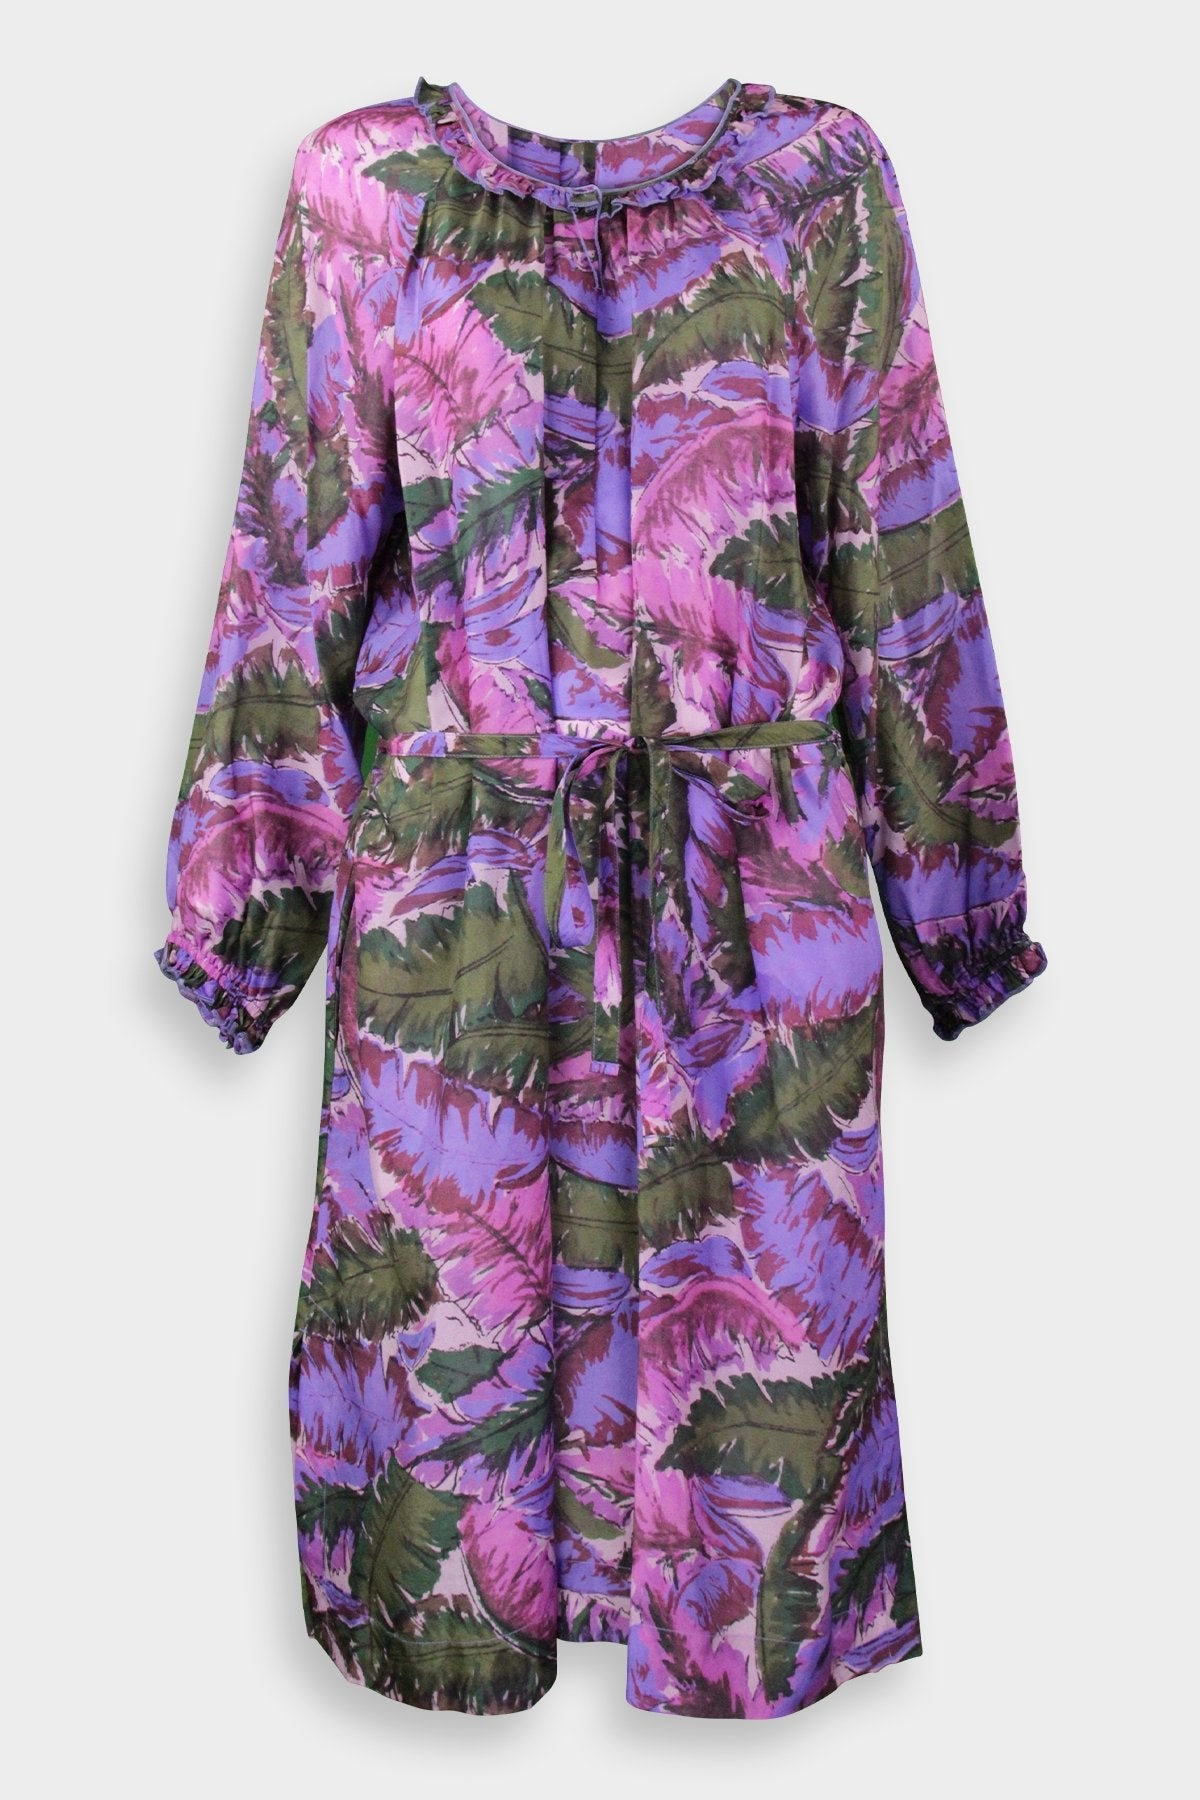 Ether Dress Print in Pink Jungle - shop-olivia.com